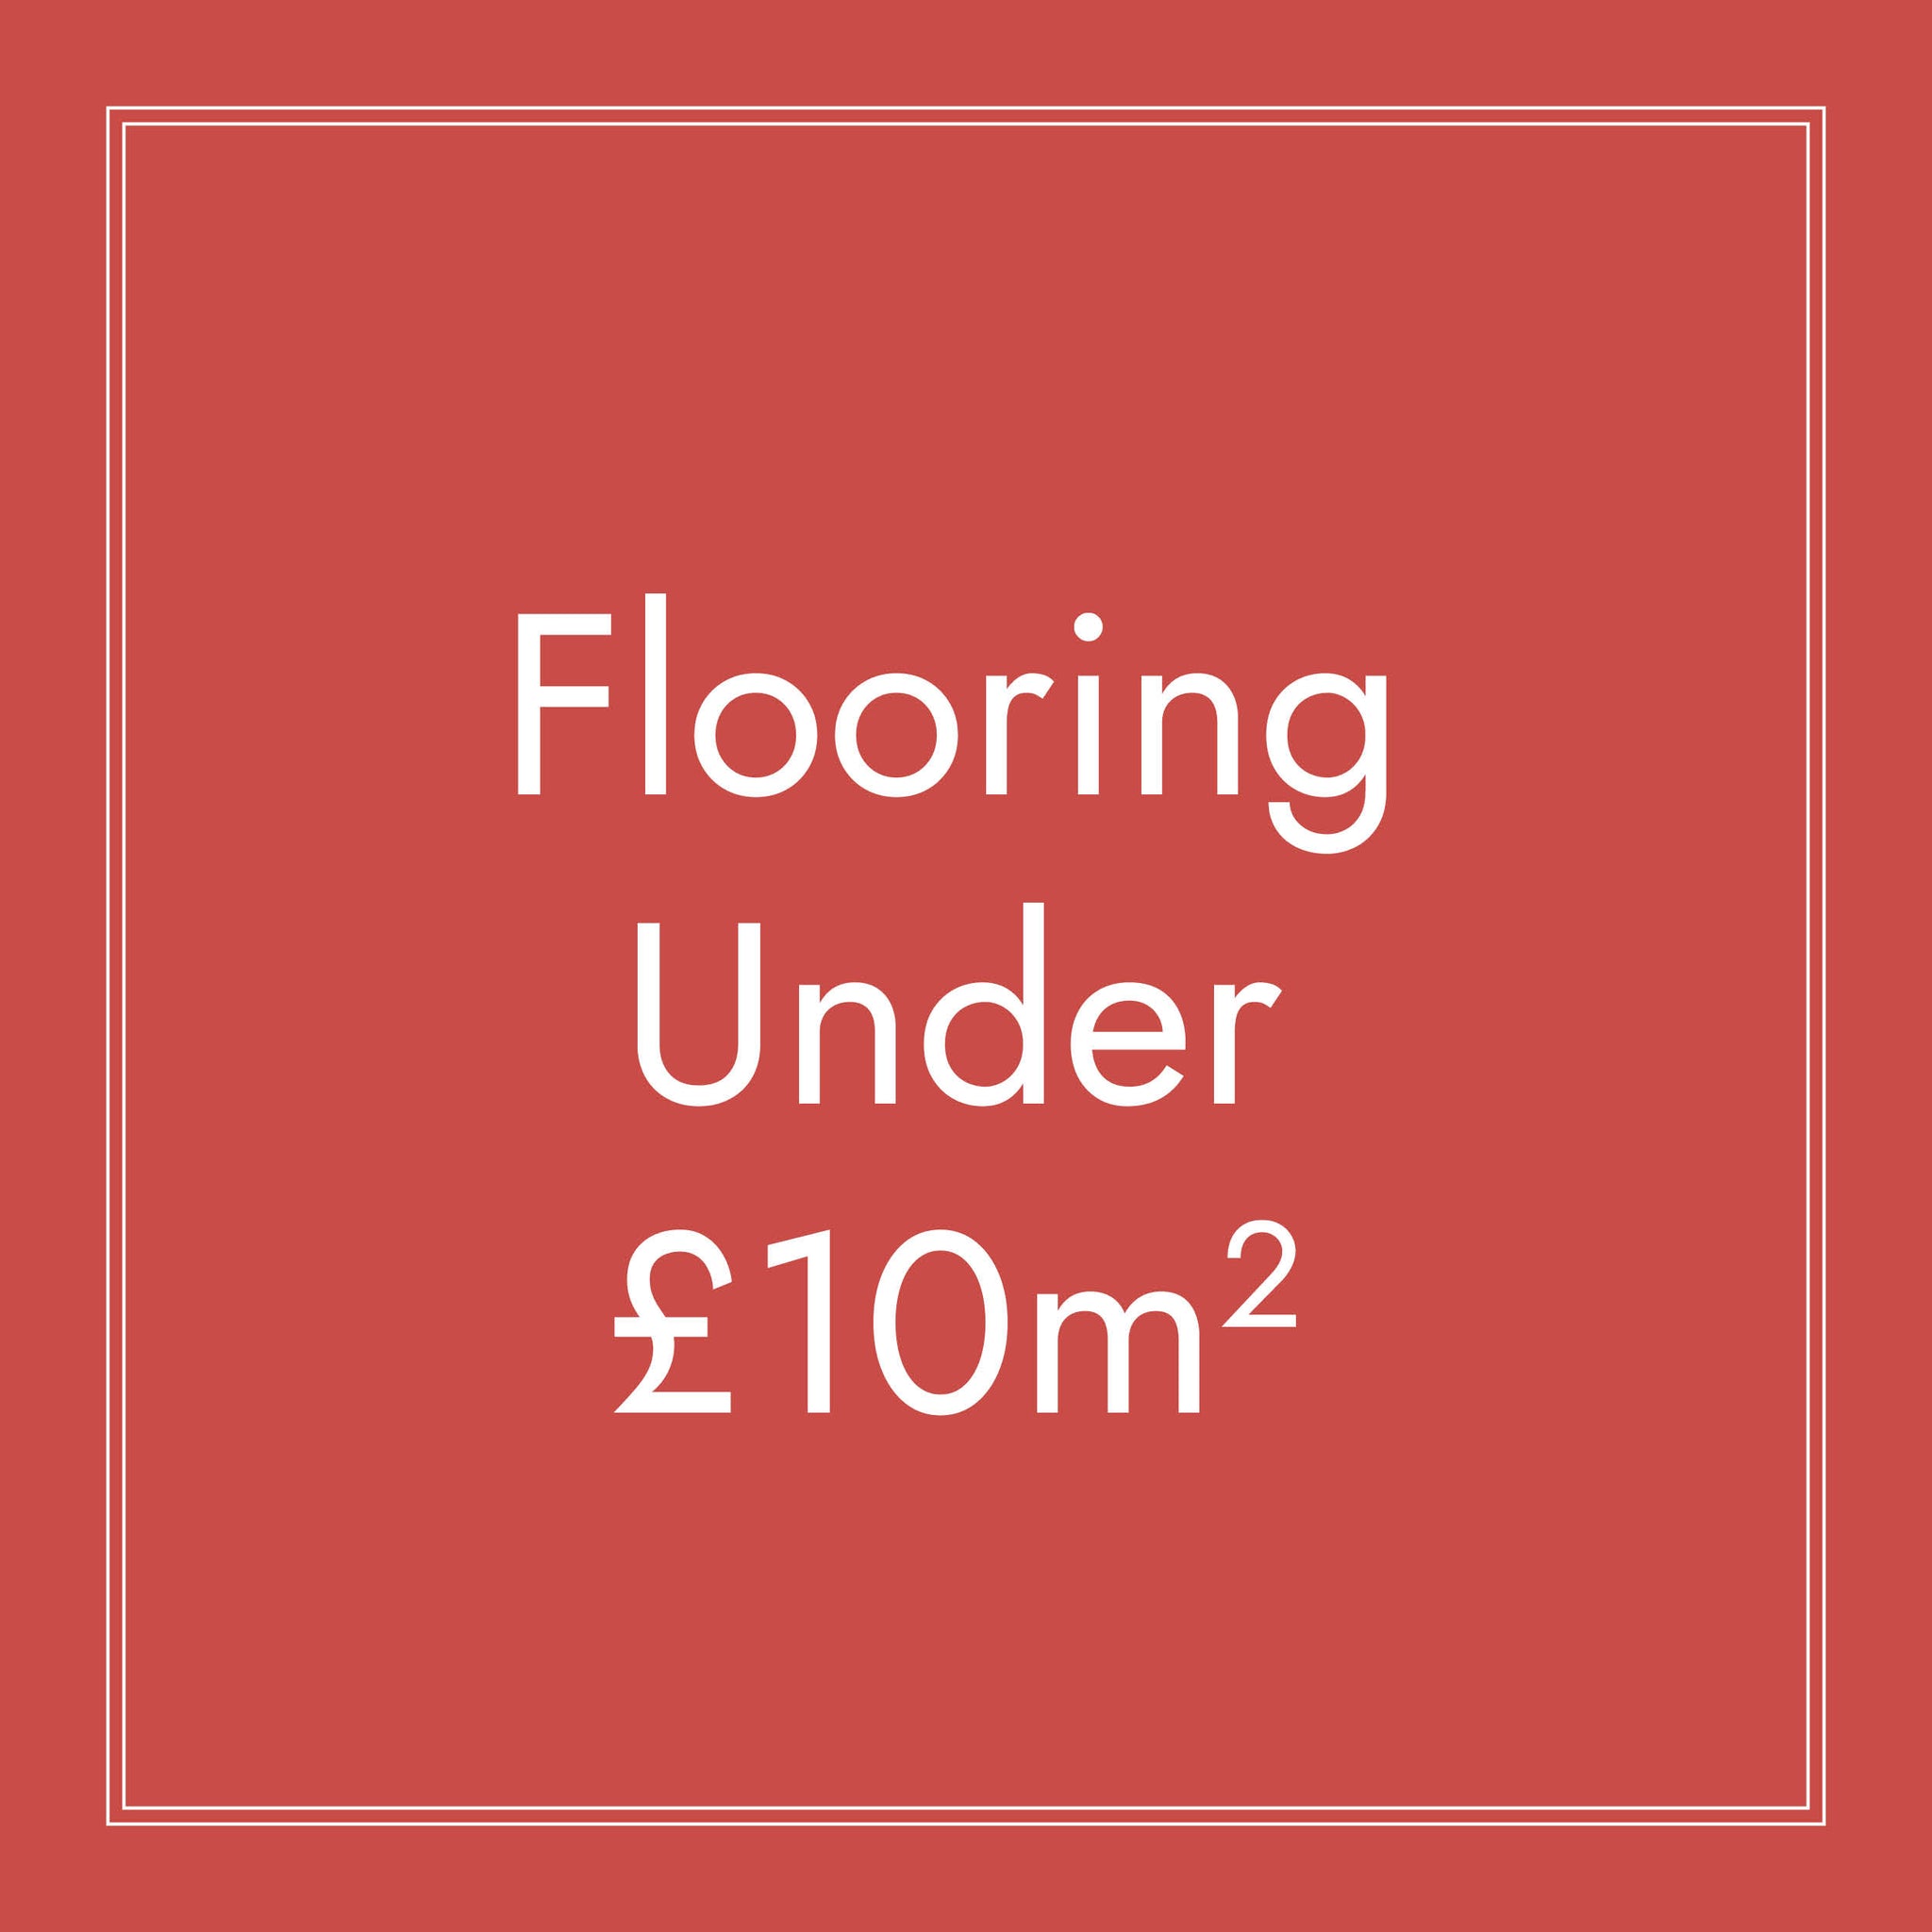 Flooring under £10